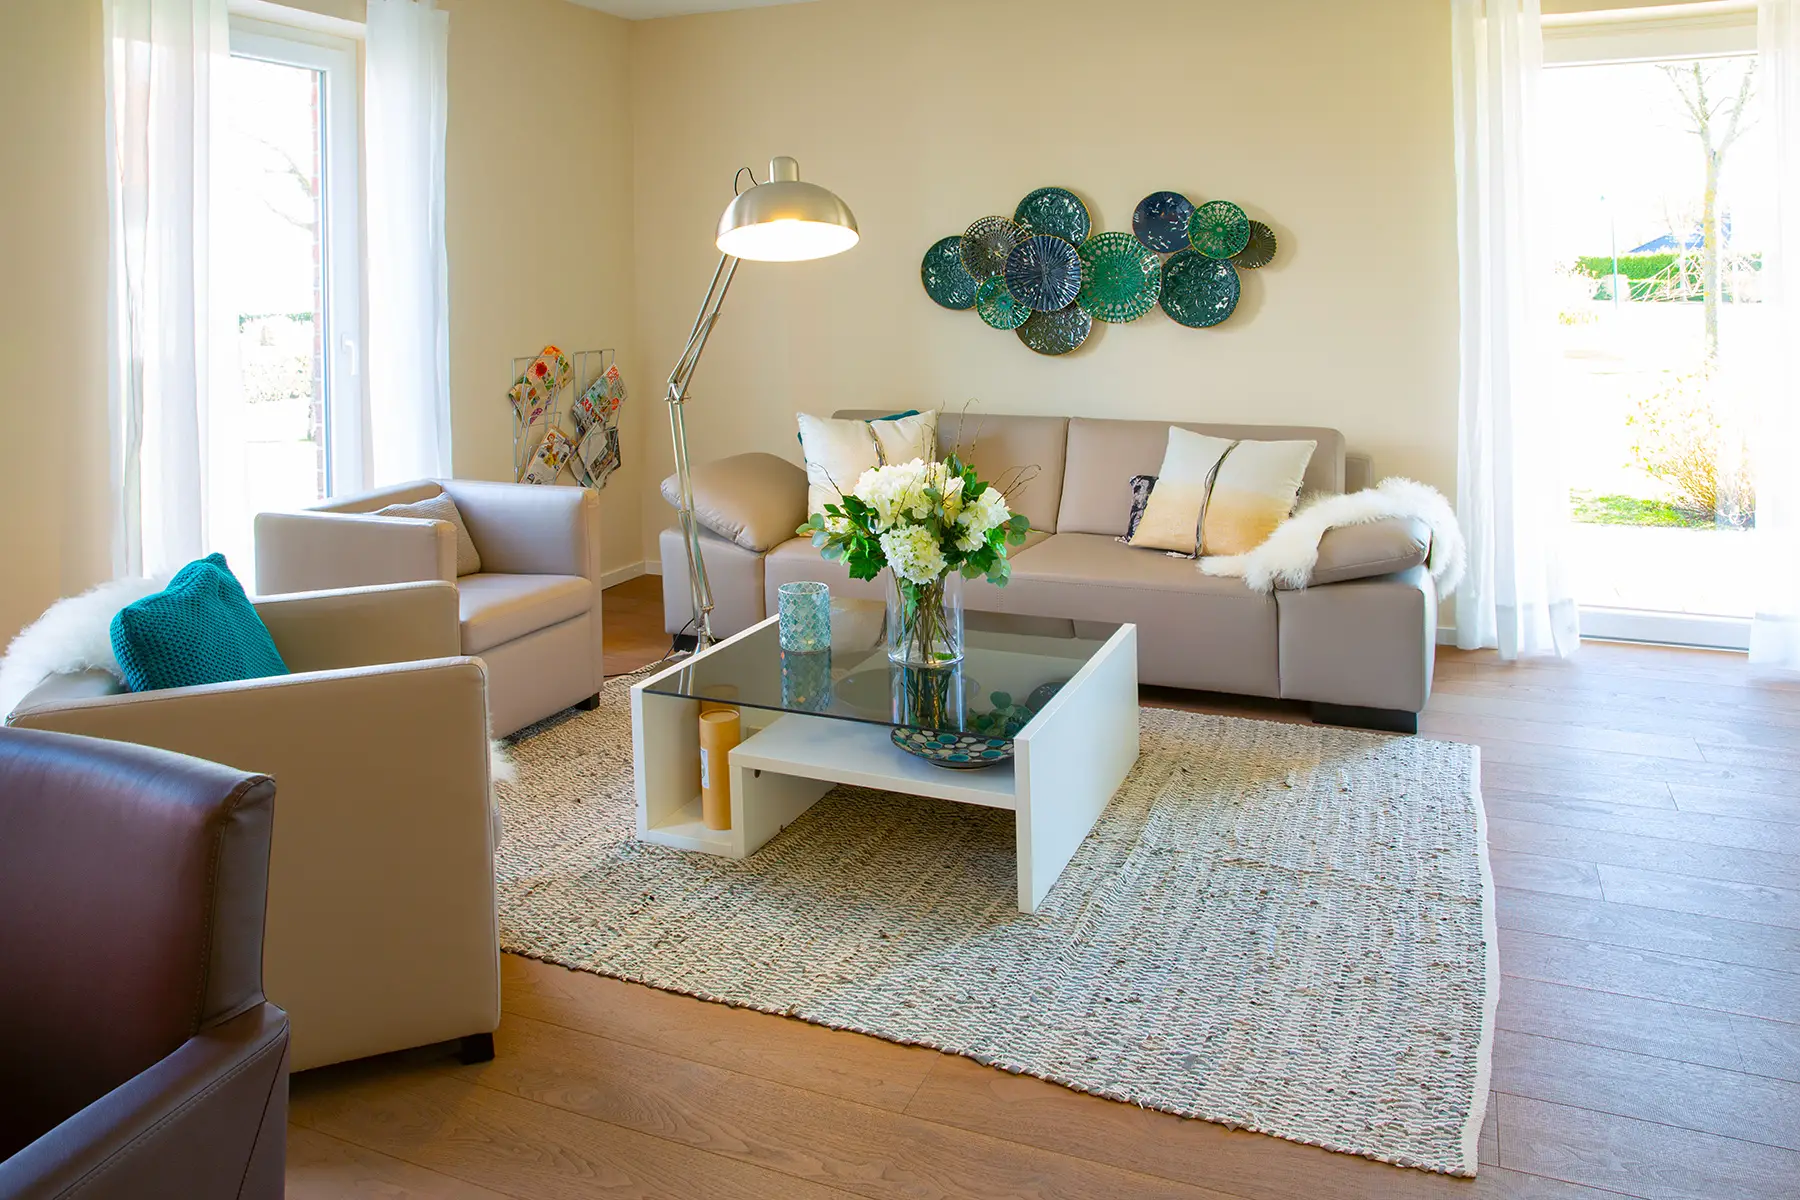 A modern furnished living room interior